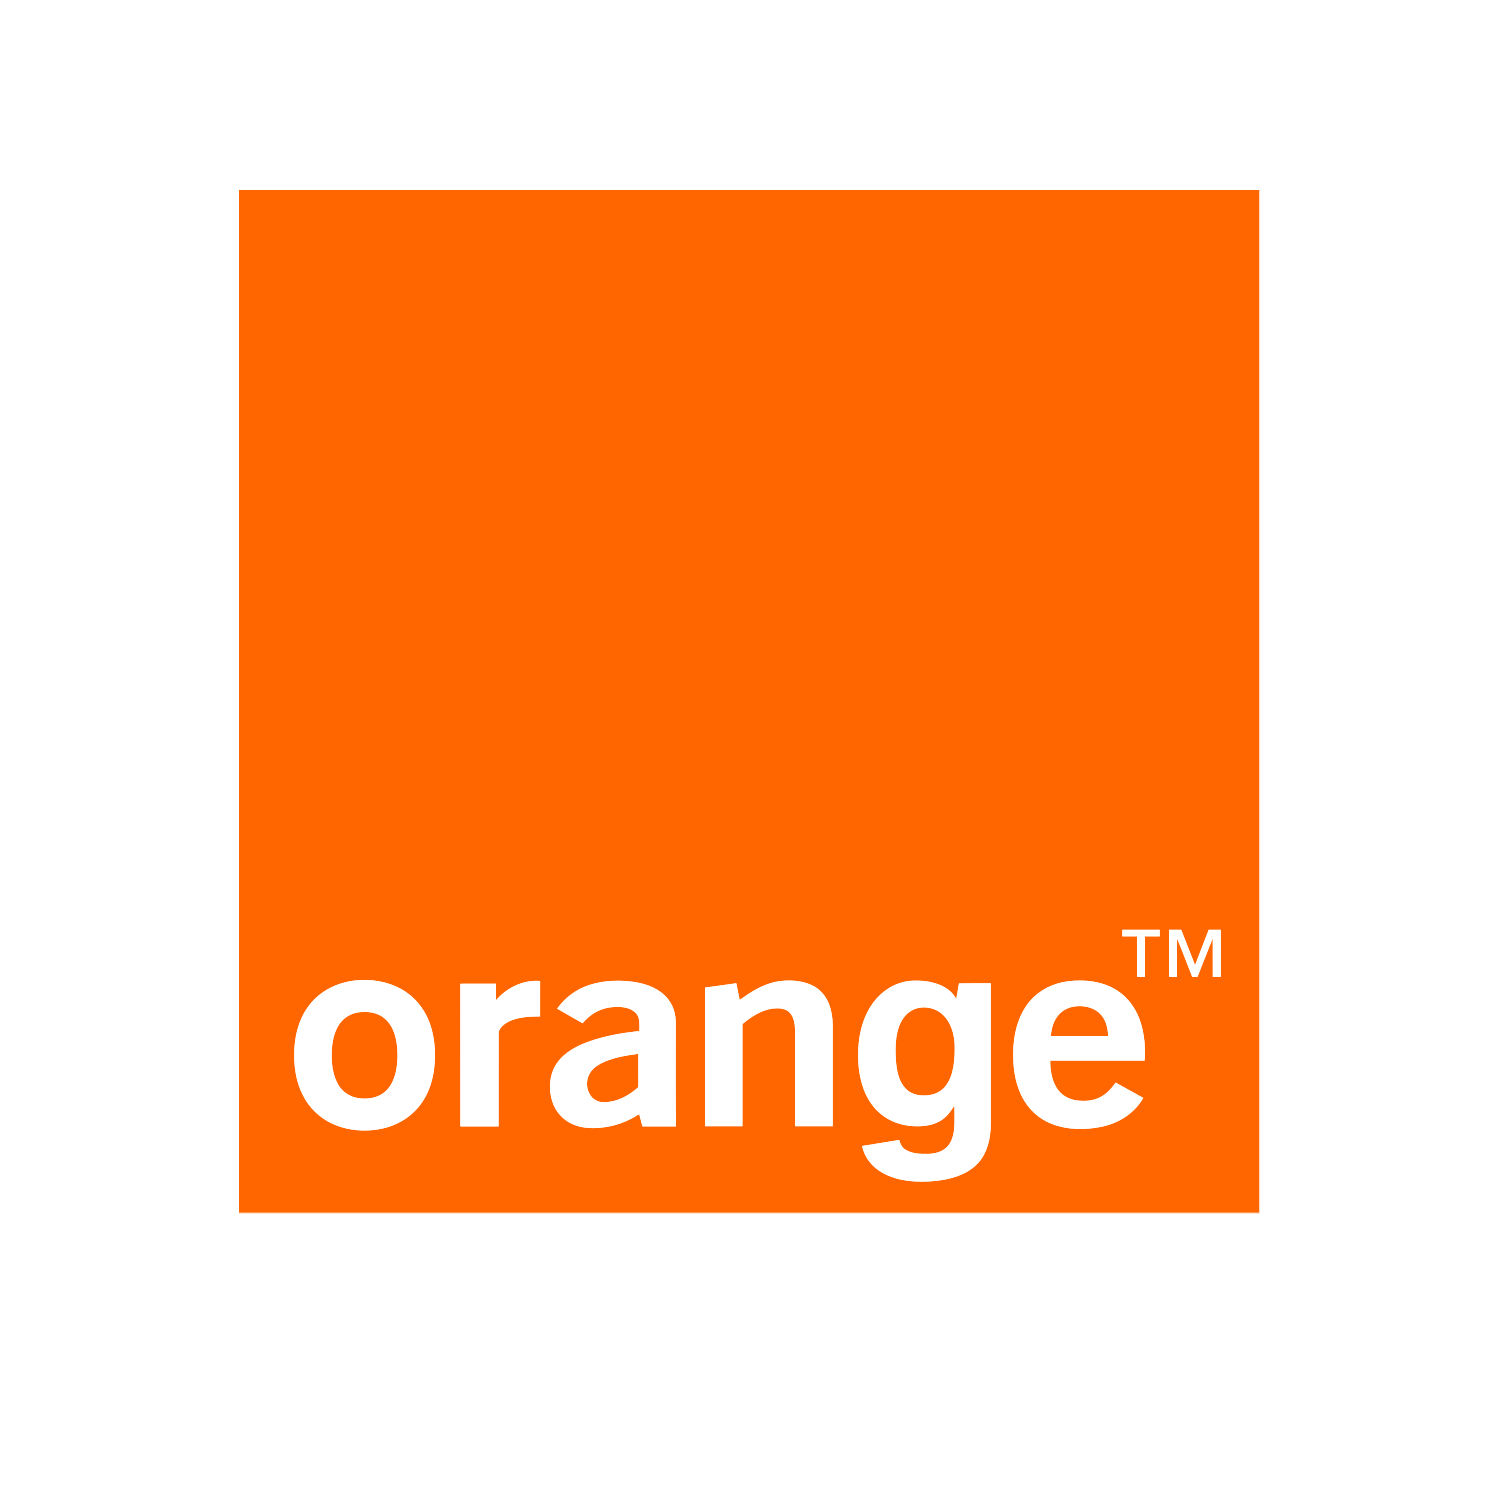 Orangefarbenes Logo